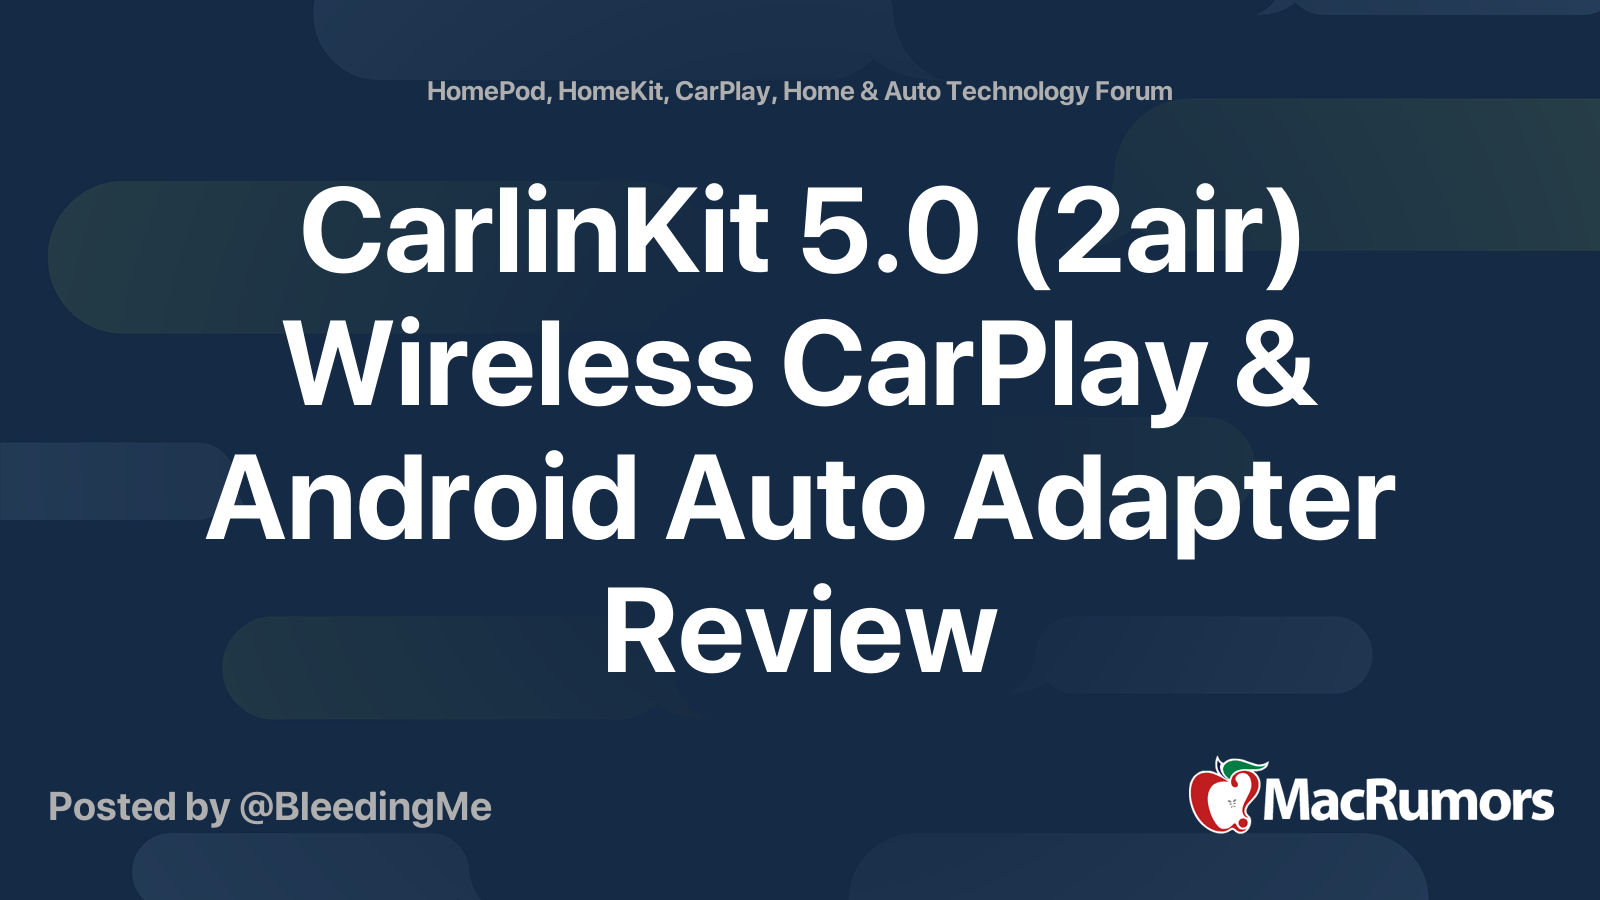 CarlinKit 5.0 (2air) Wireless CarPlay & Android Auto Adapter